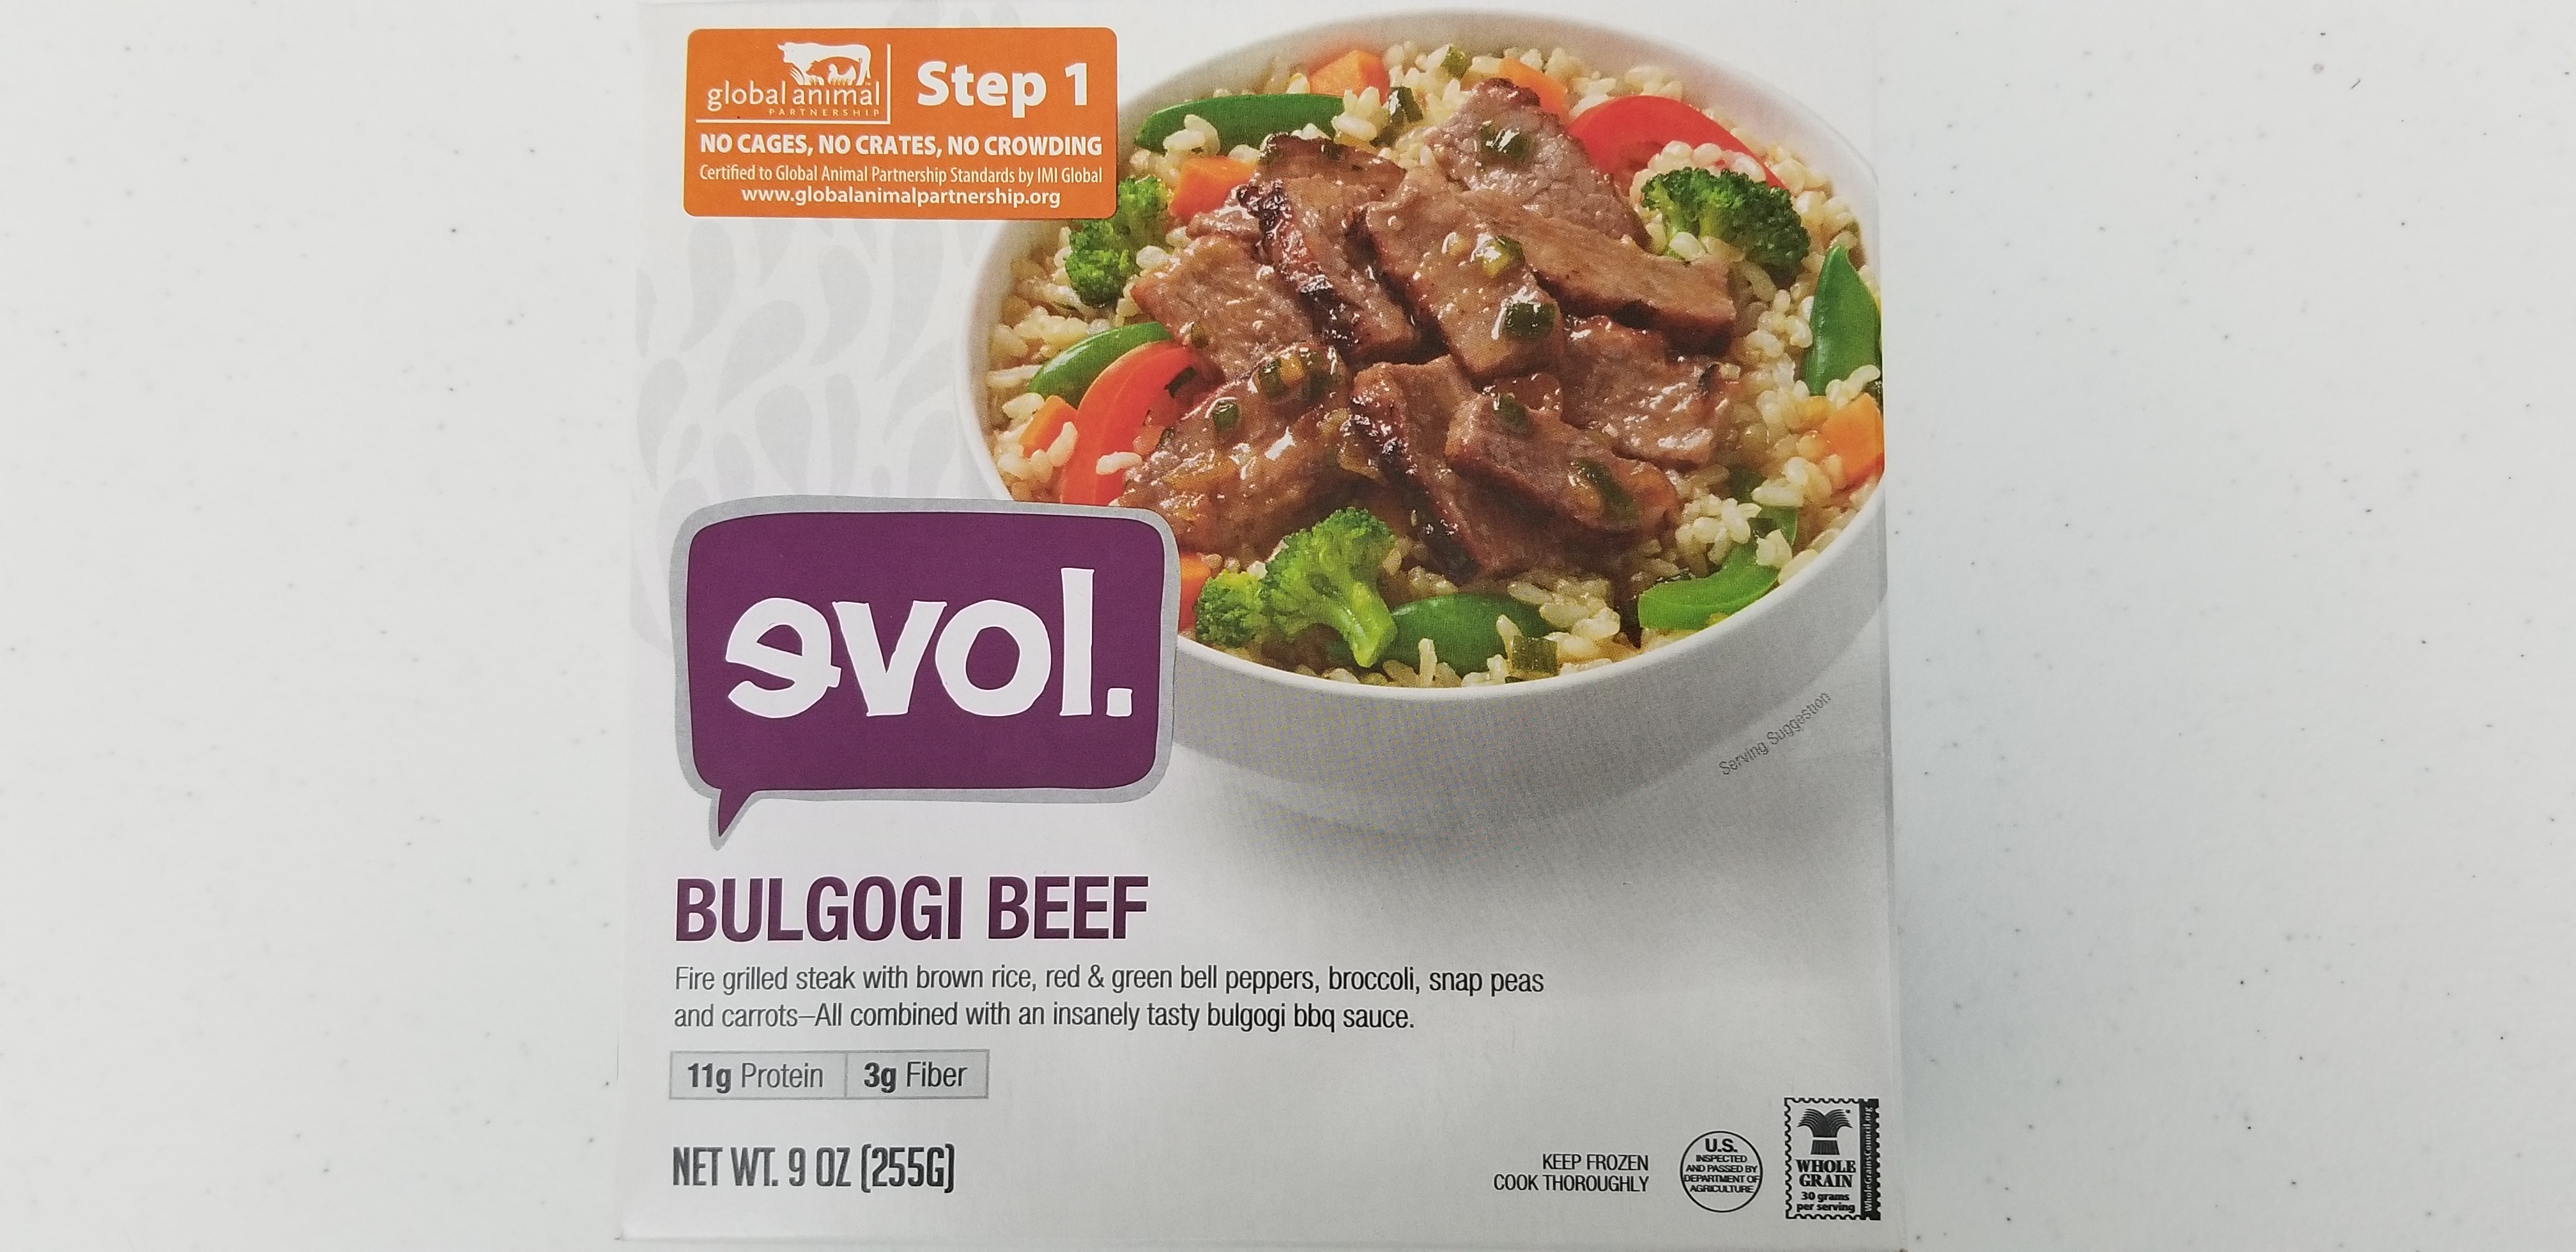 evol Bulgogi Beef review